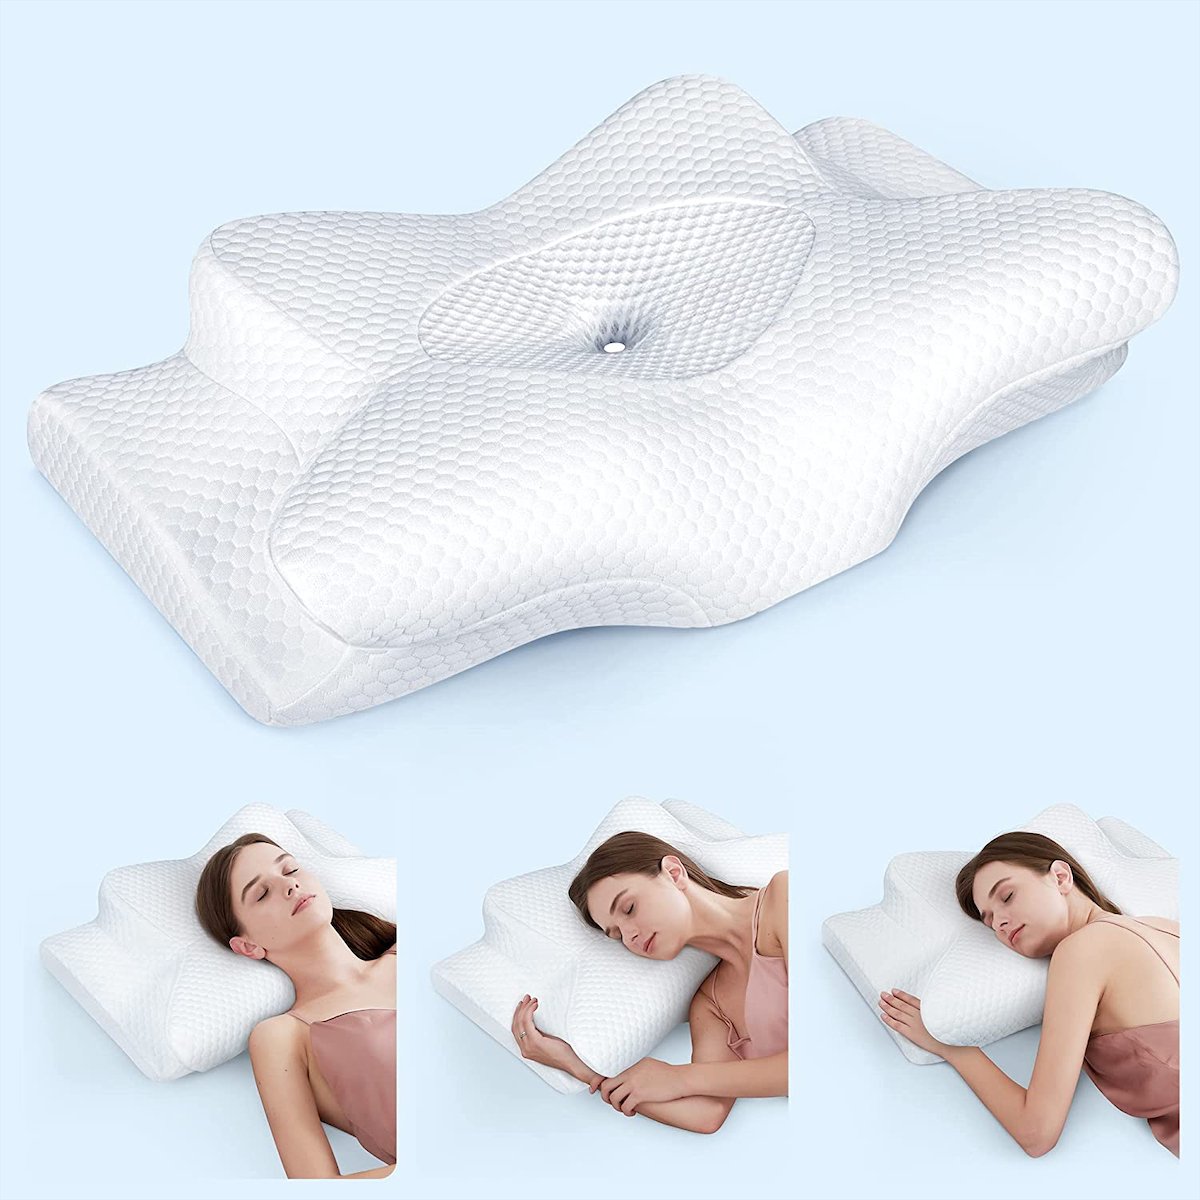  eskey Beauty Sleep Pillow Anti-Wrinkle, Anti-Aging